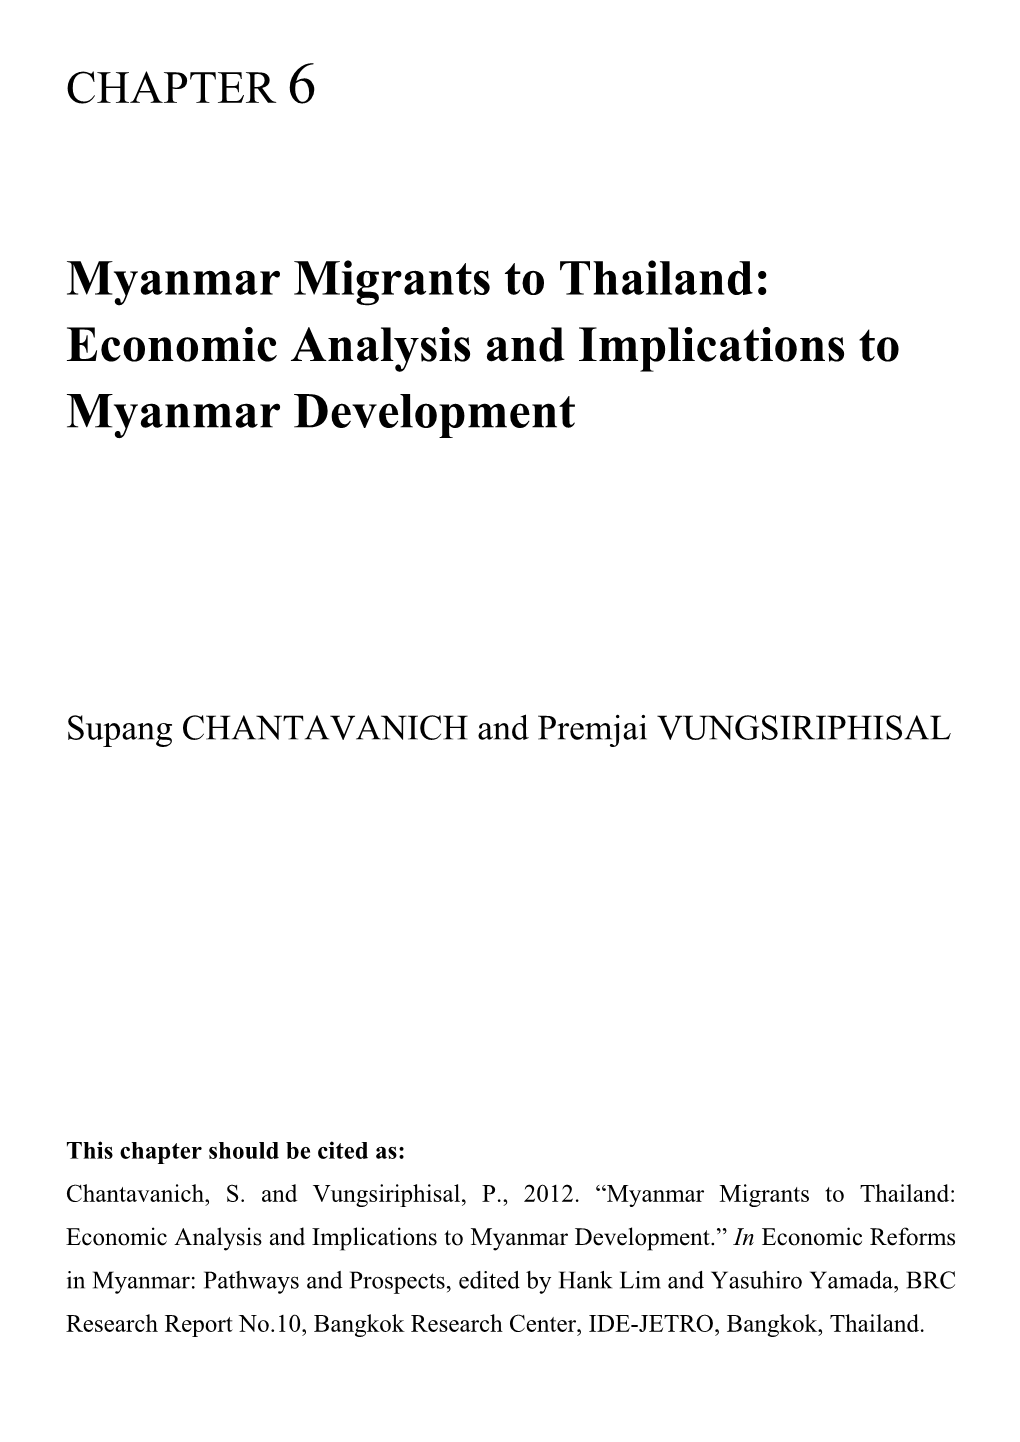 Myanmar Migrants to Thailand: Economic Analysis and Implications to Myanmar Development